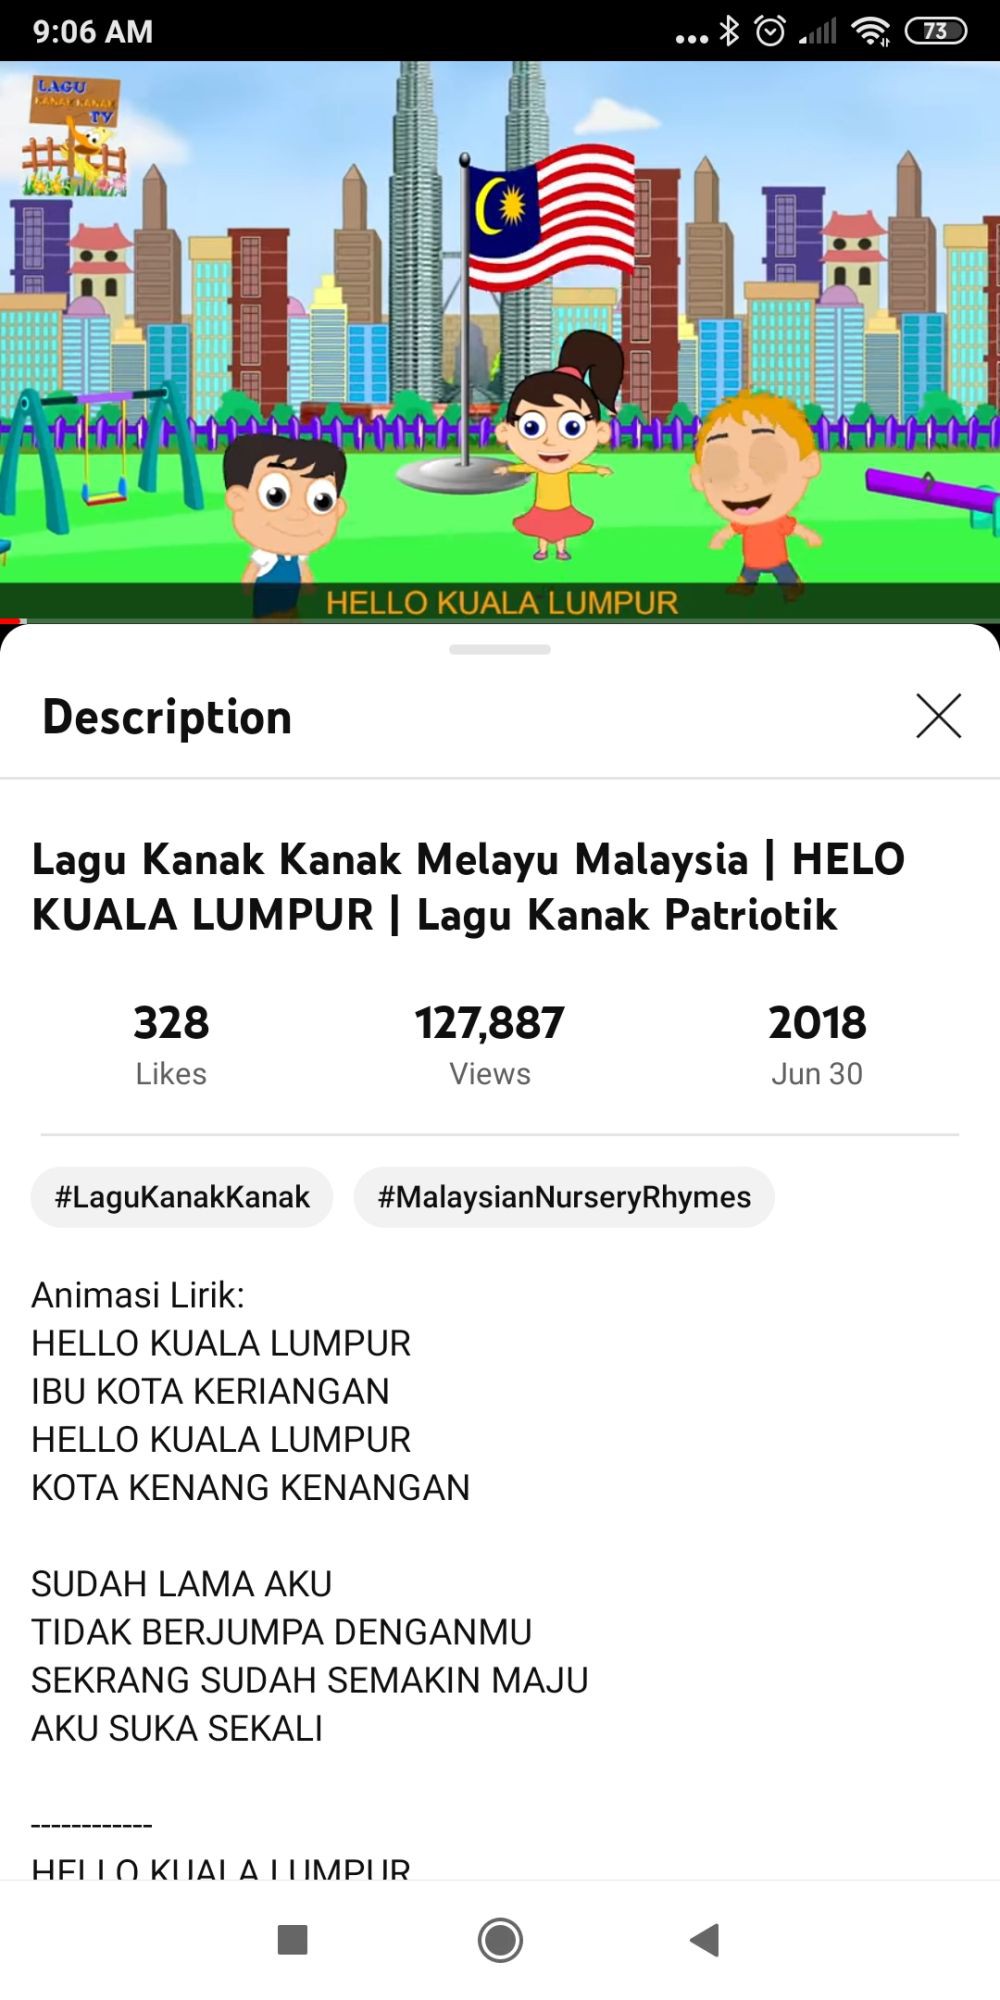 Lagu Halo-halo Bandung Diduga Dijiplak Lagu Kanak TV dari Malaysia 